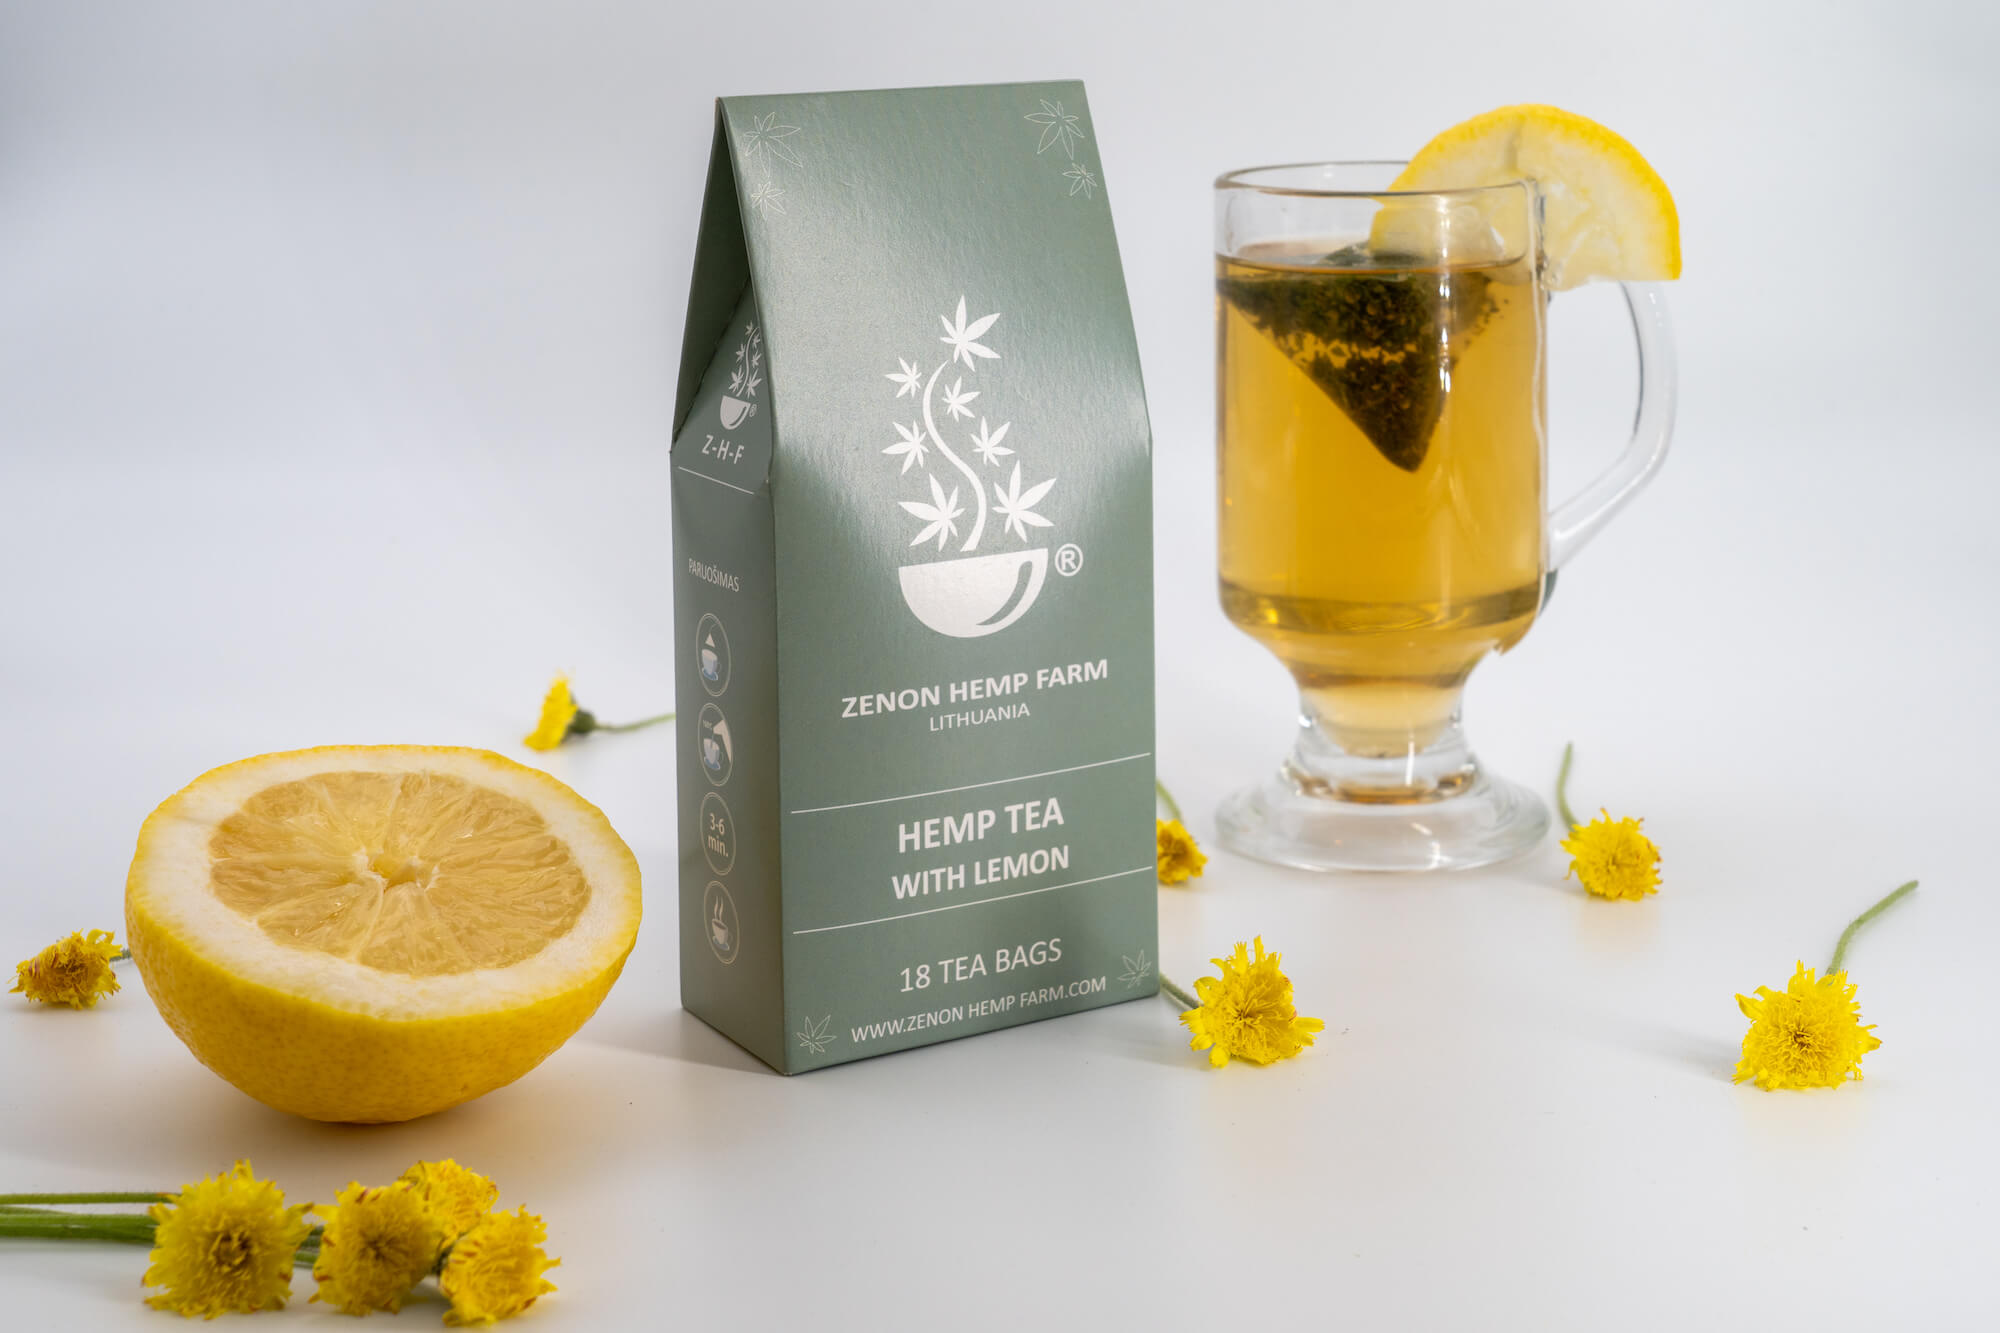 Hemp Tea with lemon flavour produced in Organic farm Zenon Hemp Farm